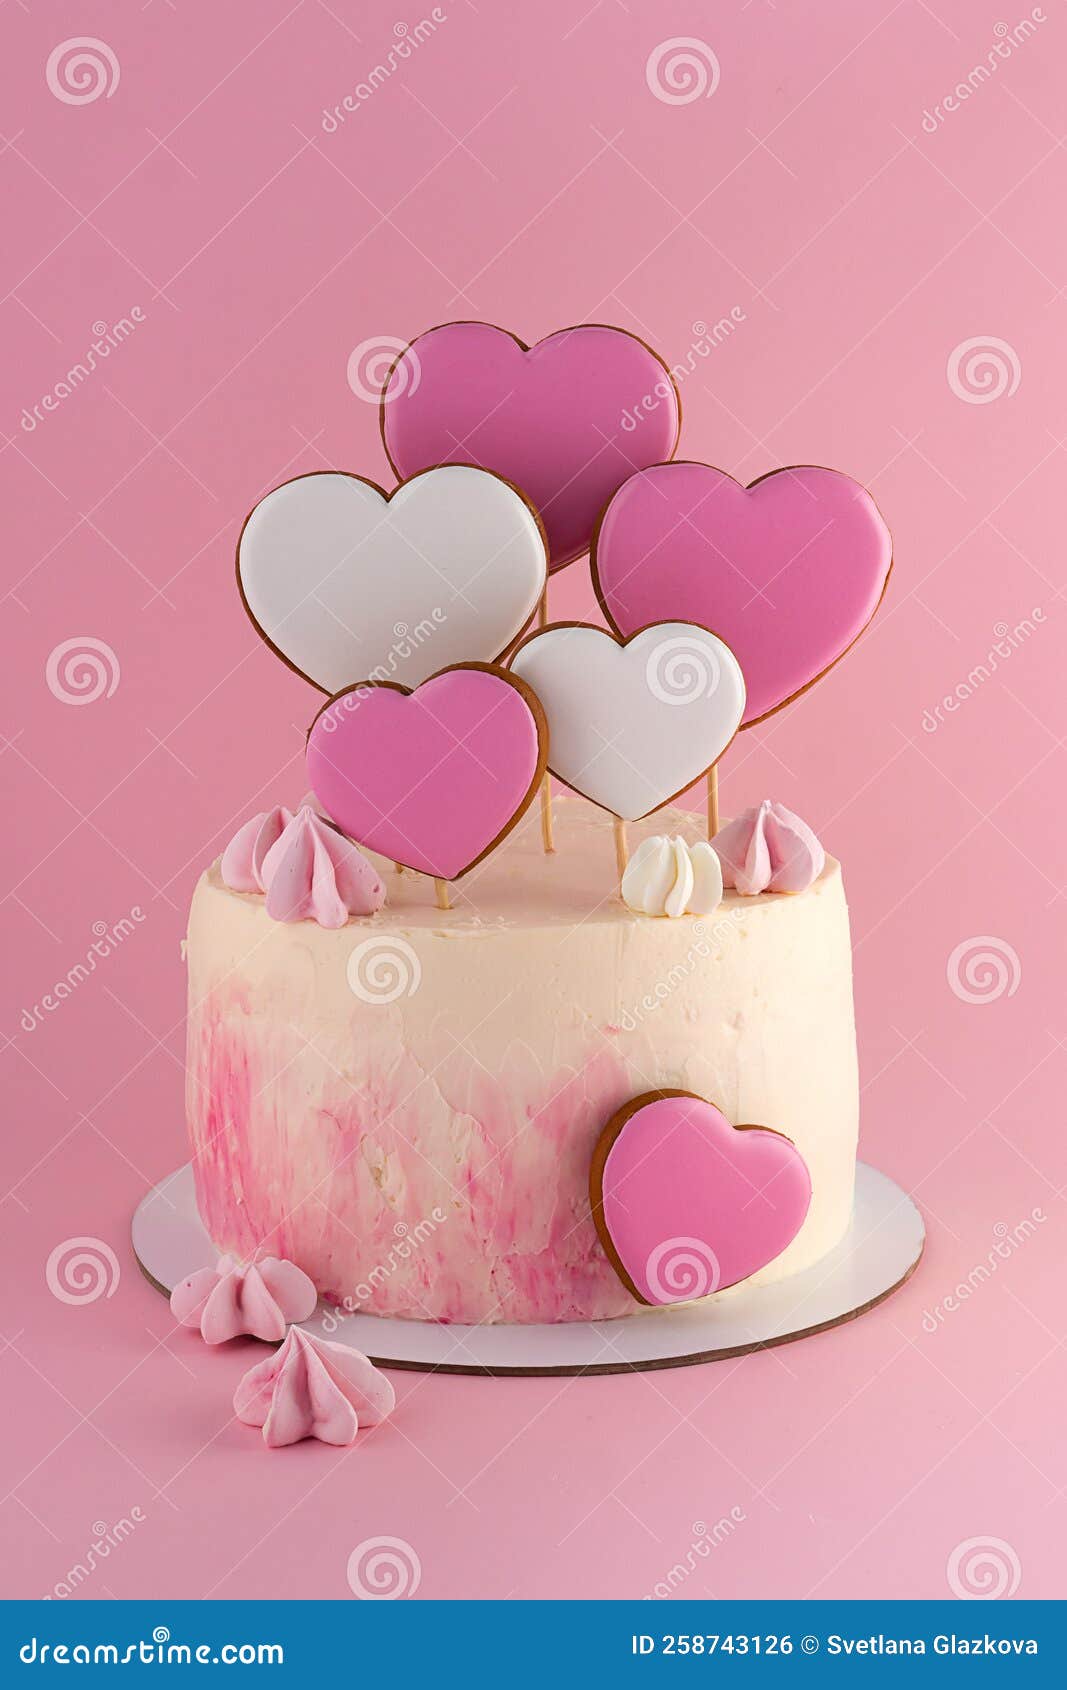 FREE 10 Creative Birthday Cake Designs in PSD